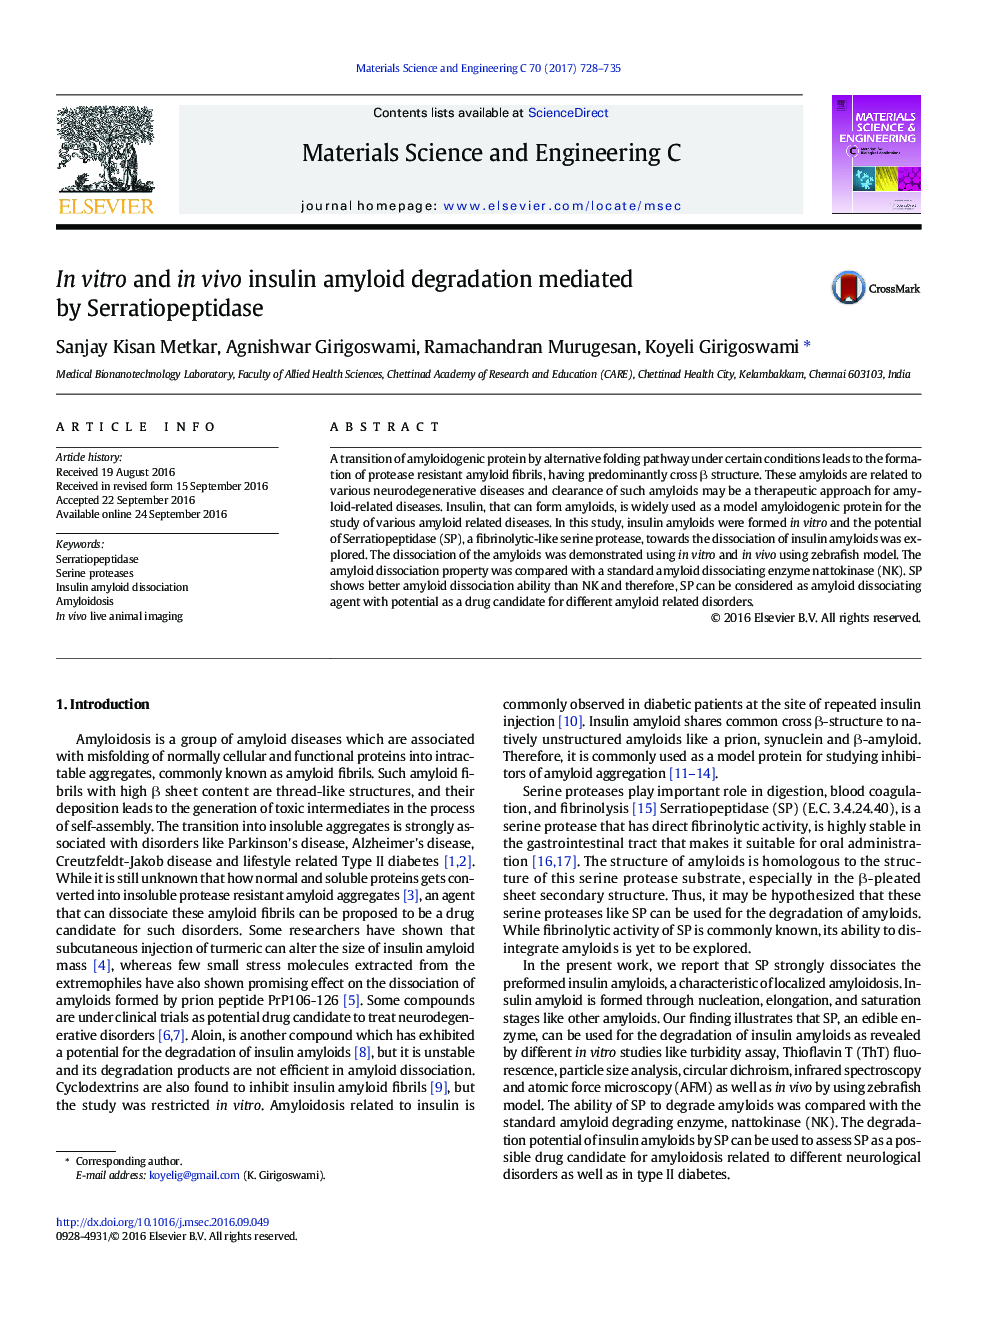 In vitro and in vivo insulin amyloid degradation mediated by Serratiopeptidase